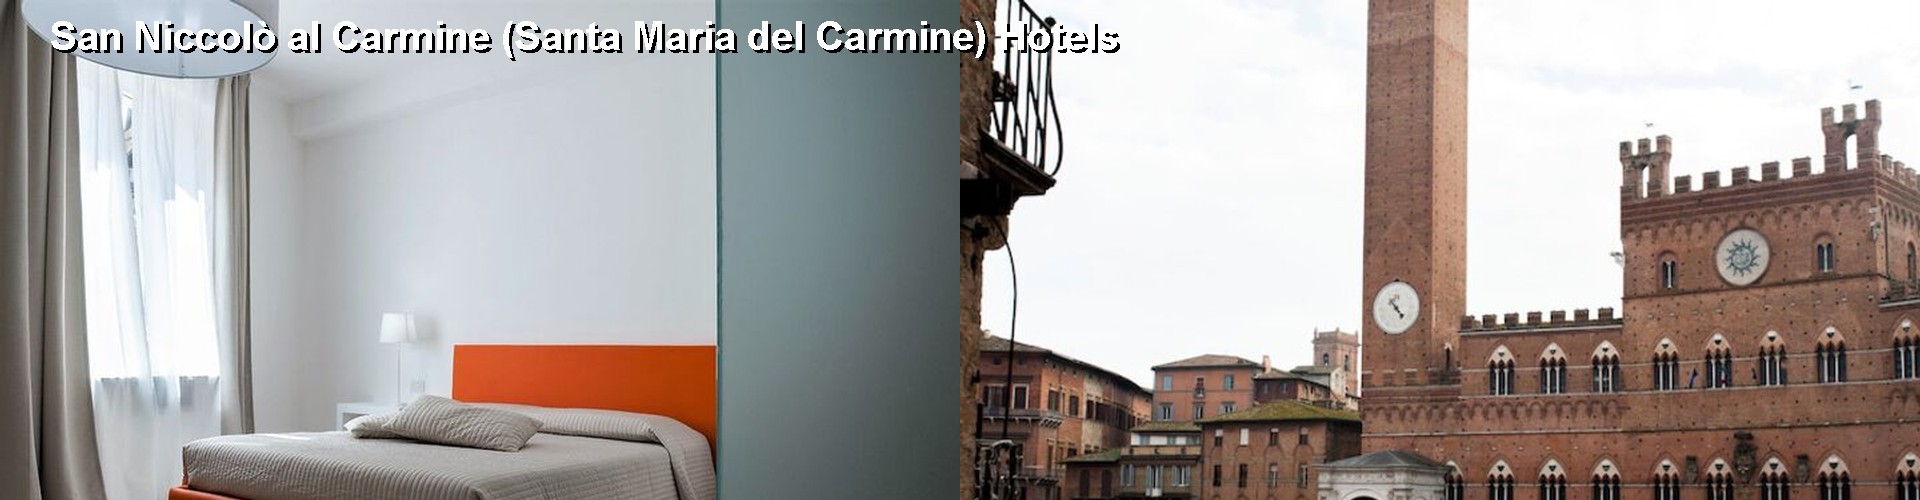 5 Best Hotels near San Niccolò al Carmine (Santa Maria del Carmine)